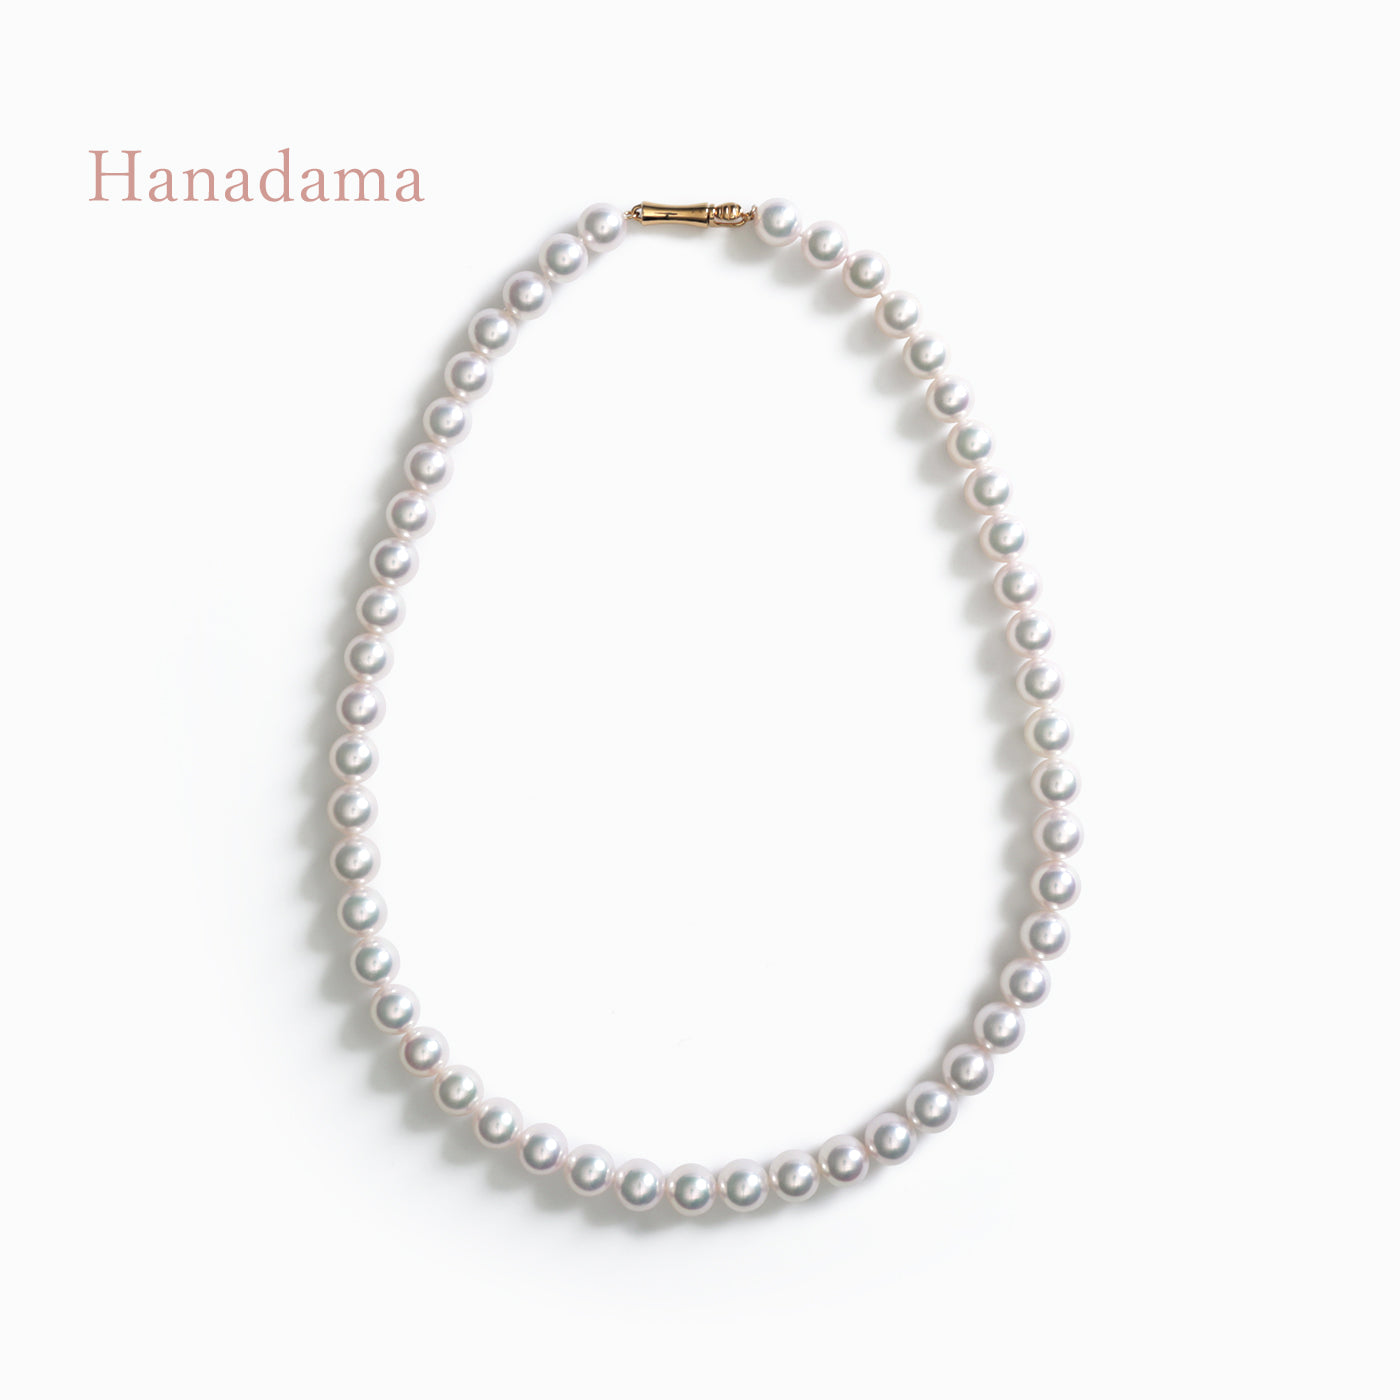 8.0-8.5mm "Hanadama" Akoya Pearl Necklace